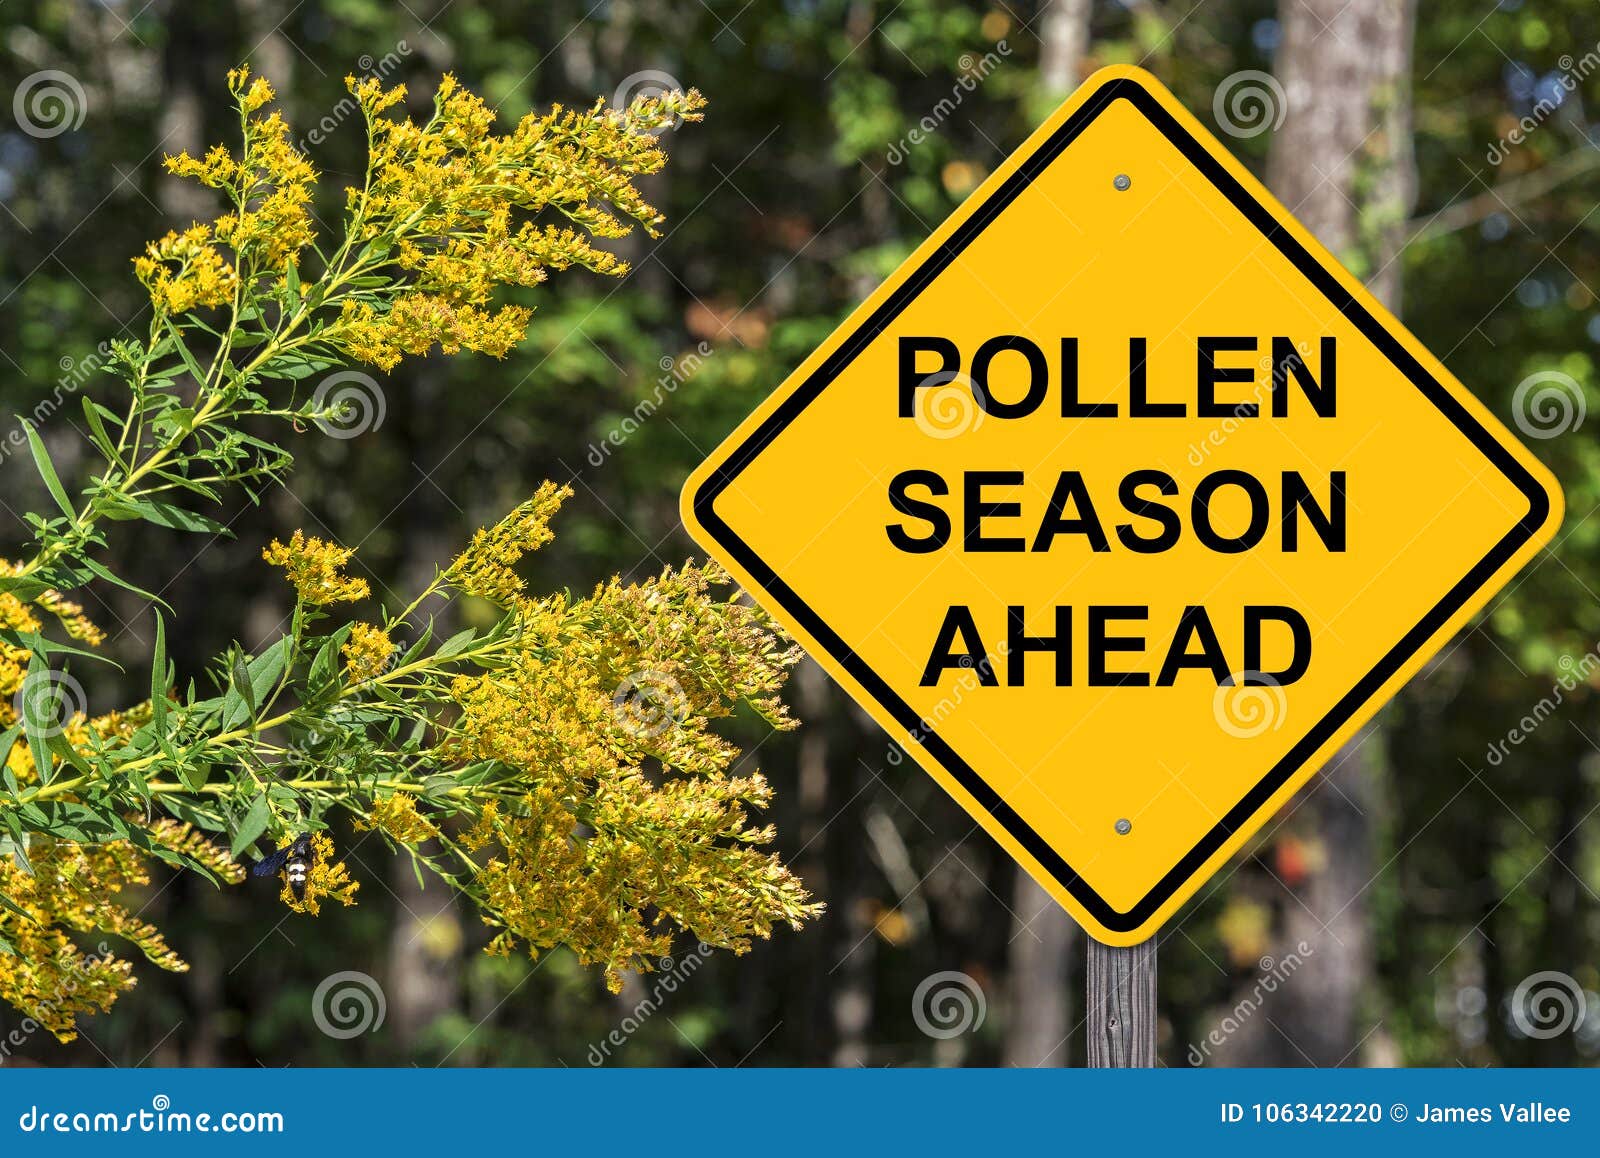 cuation - pollen season ahead